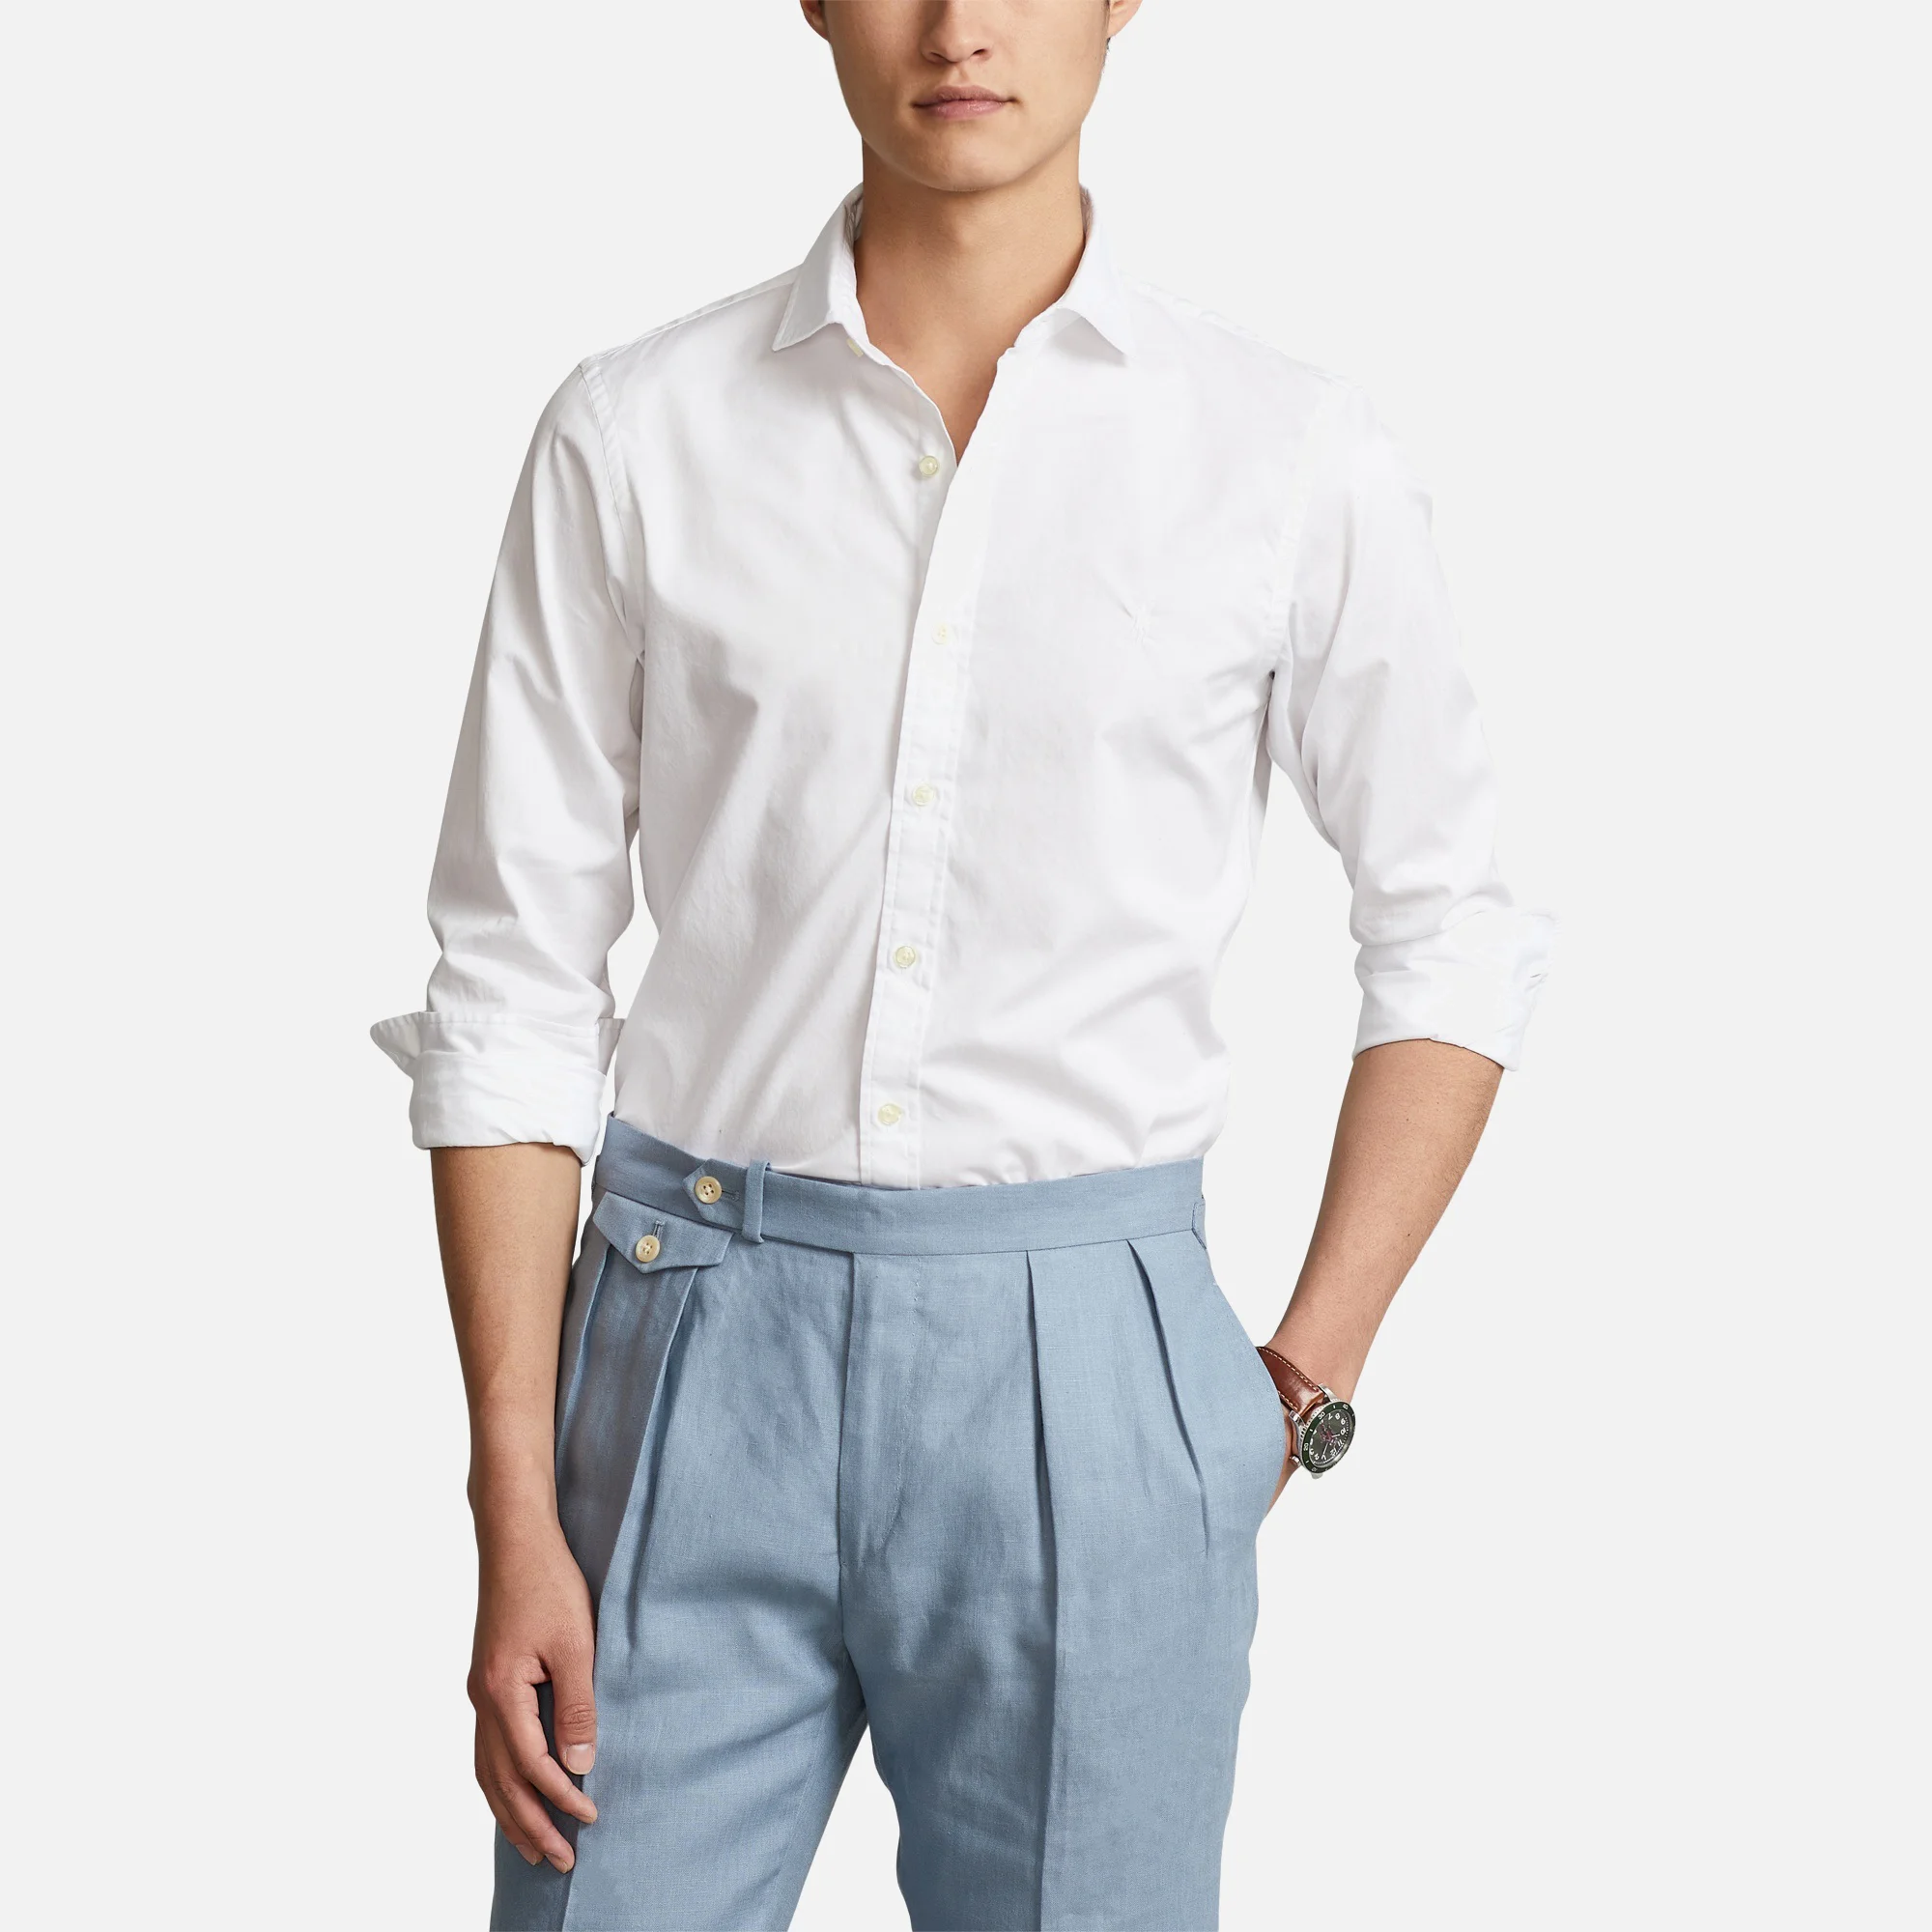 Polo Ralph Lauren Men's Slim Fit Garment Dyed Twill Shirt - White Image 1